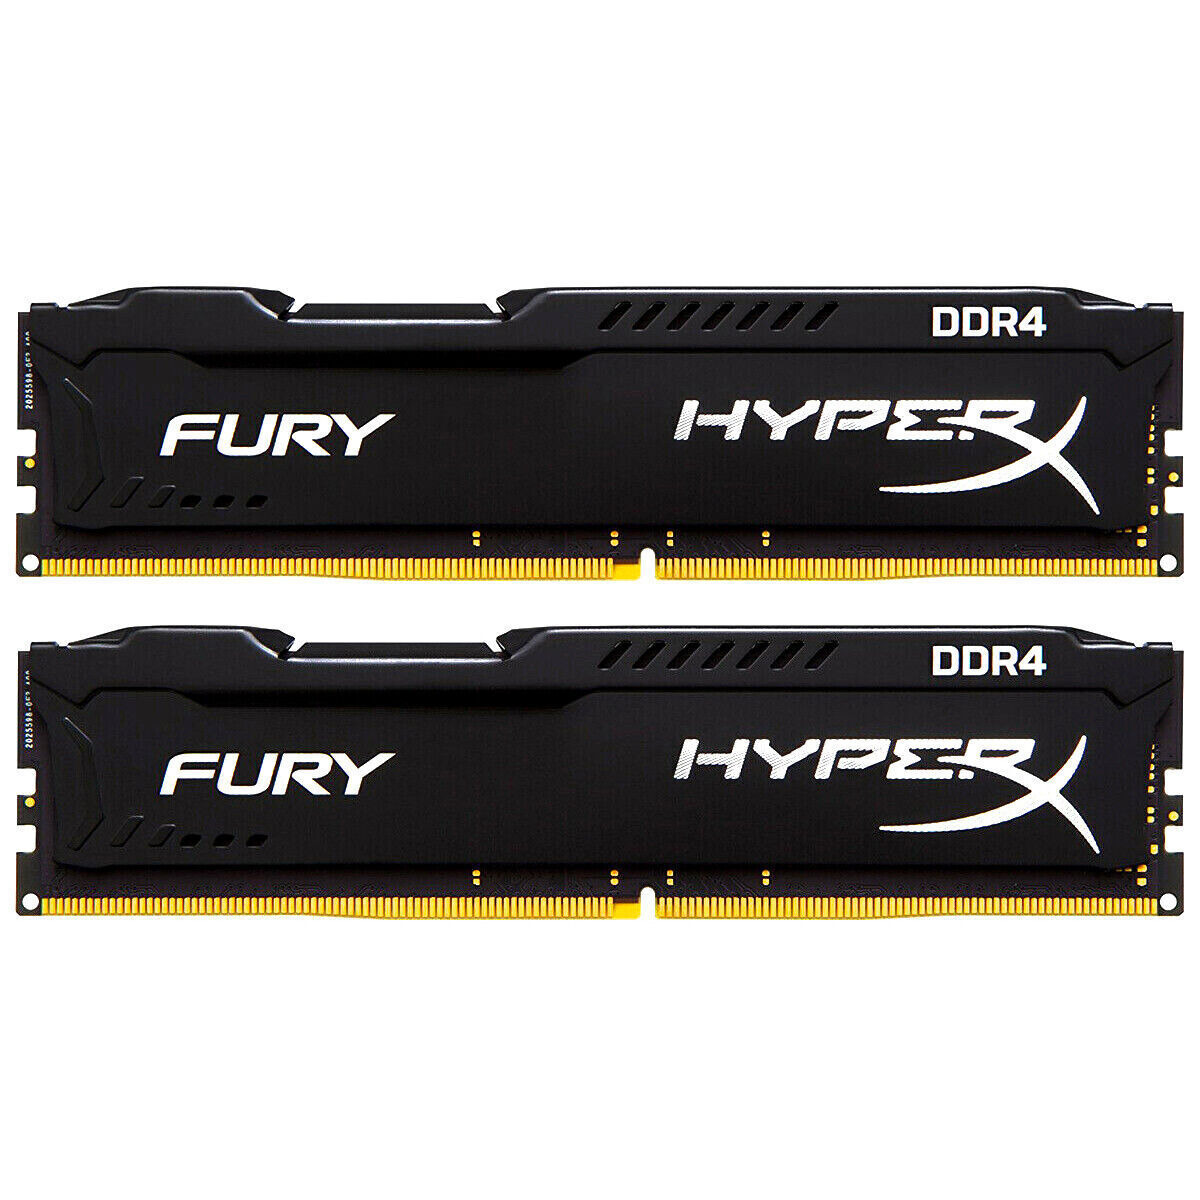 HyperX FURY DDR4 16GB 3200 MHz PC4-25600 Desktop RAM Memory DIMM 288pin 2x 16GB